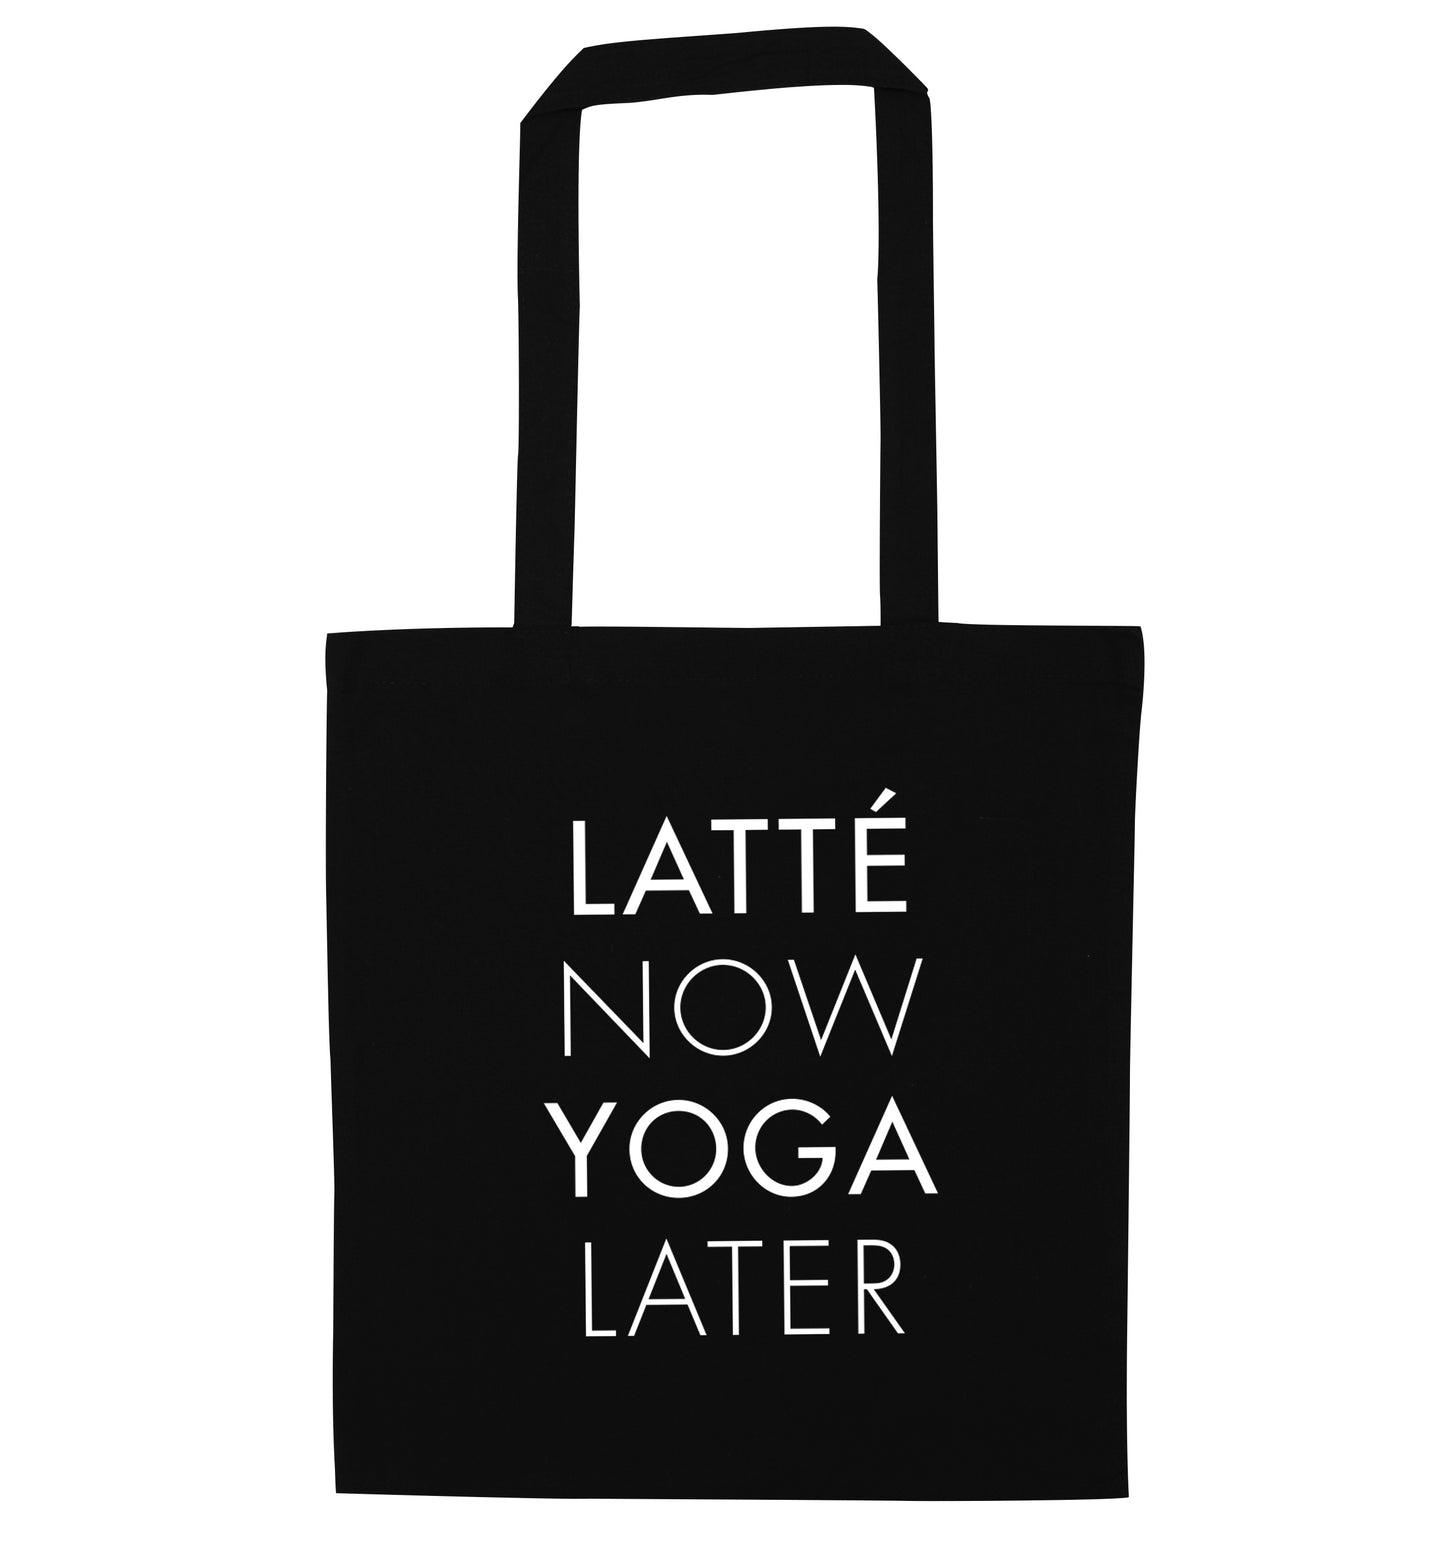 Latte now yoga later black tote bag